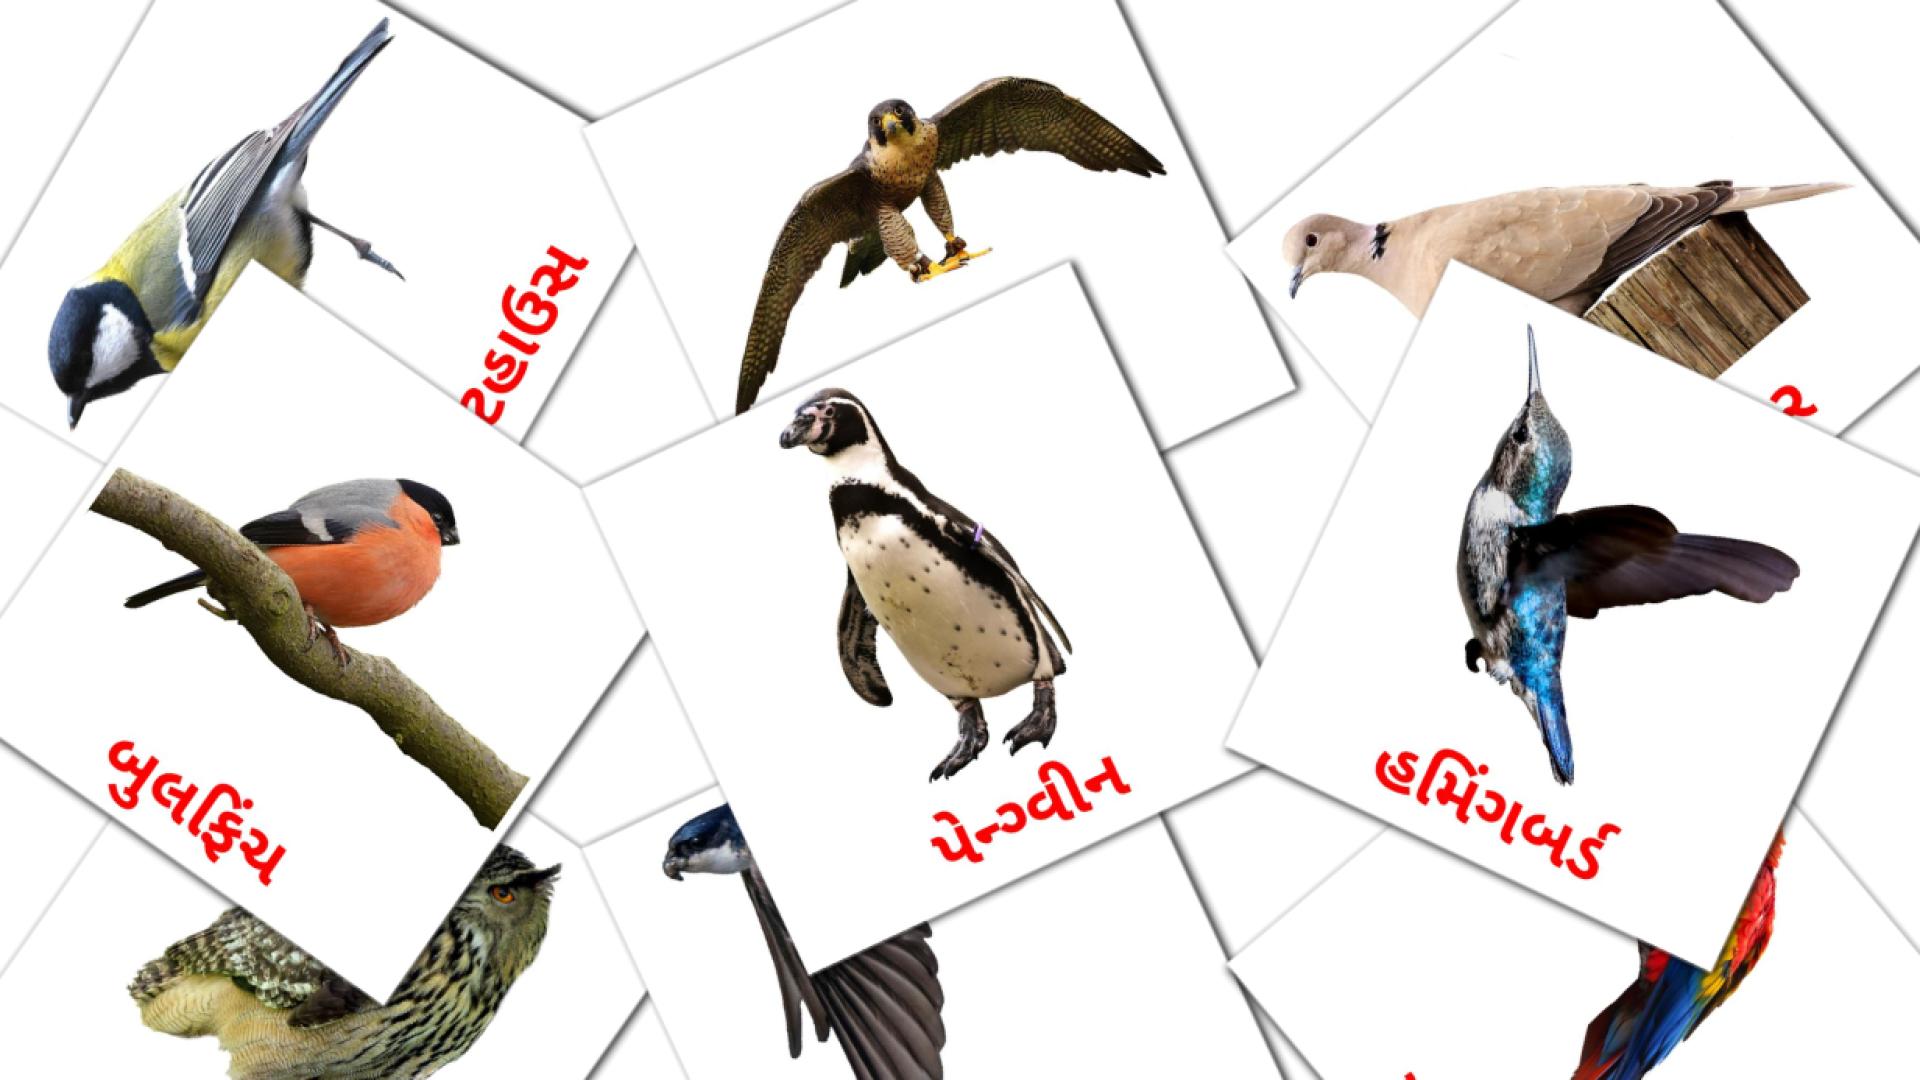 18 Imagiers જંગલી પક્ષીઓ